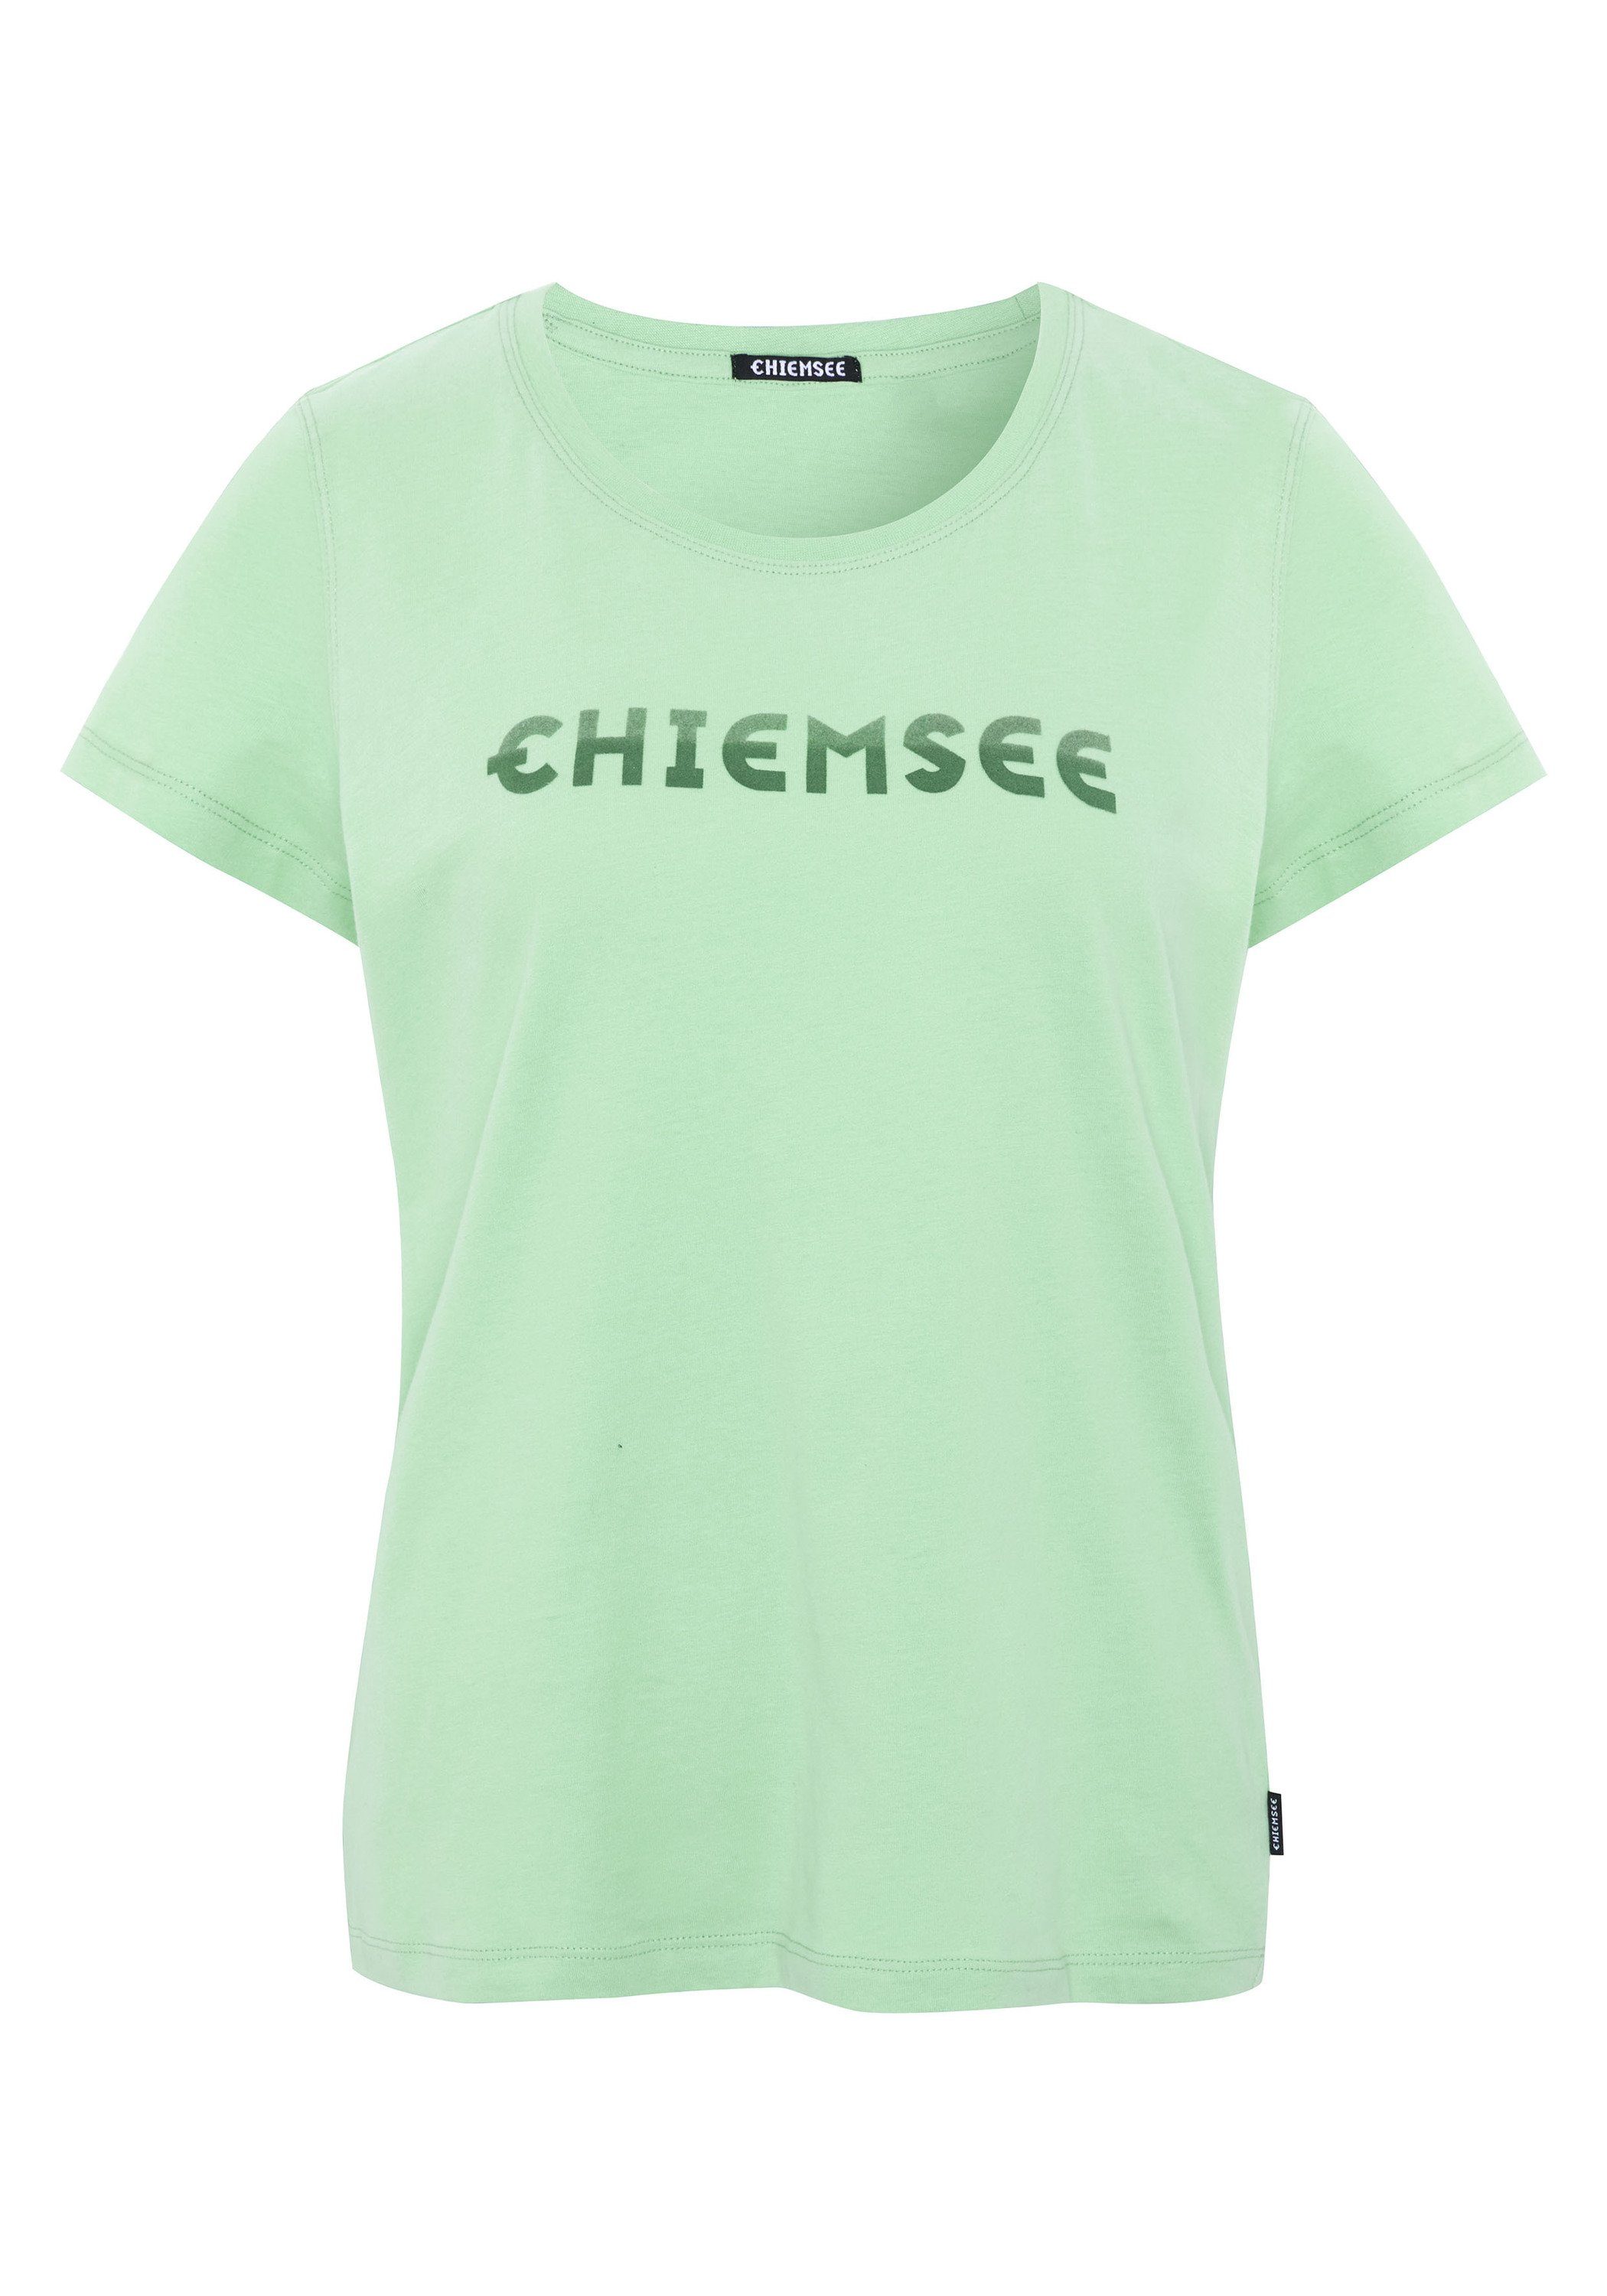 T-Shirt in Neptune Farbverlauf-Optik mit 1 Print-Shirt Green Chiemsee Logo